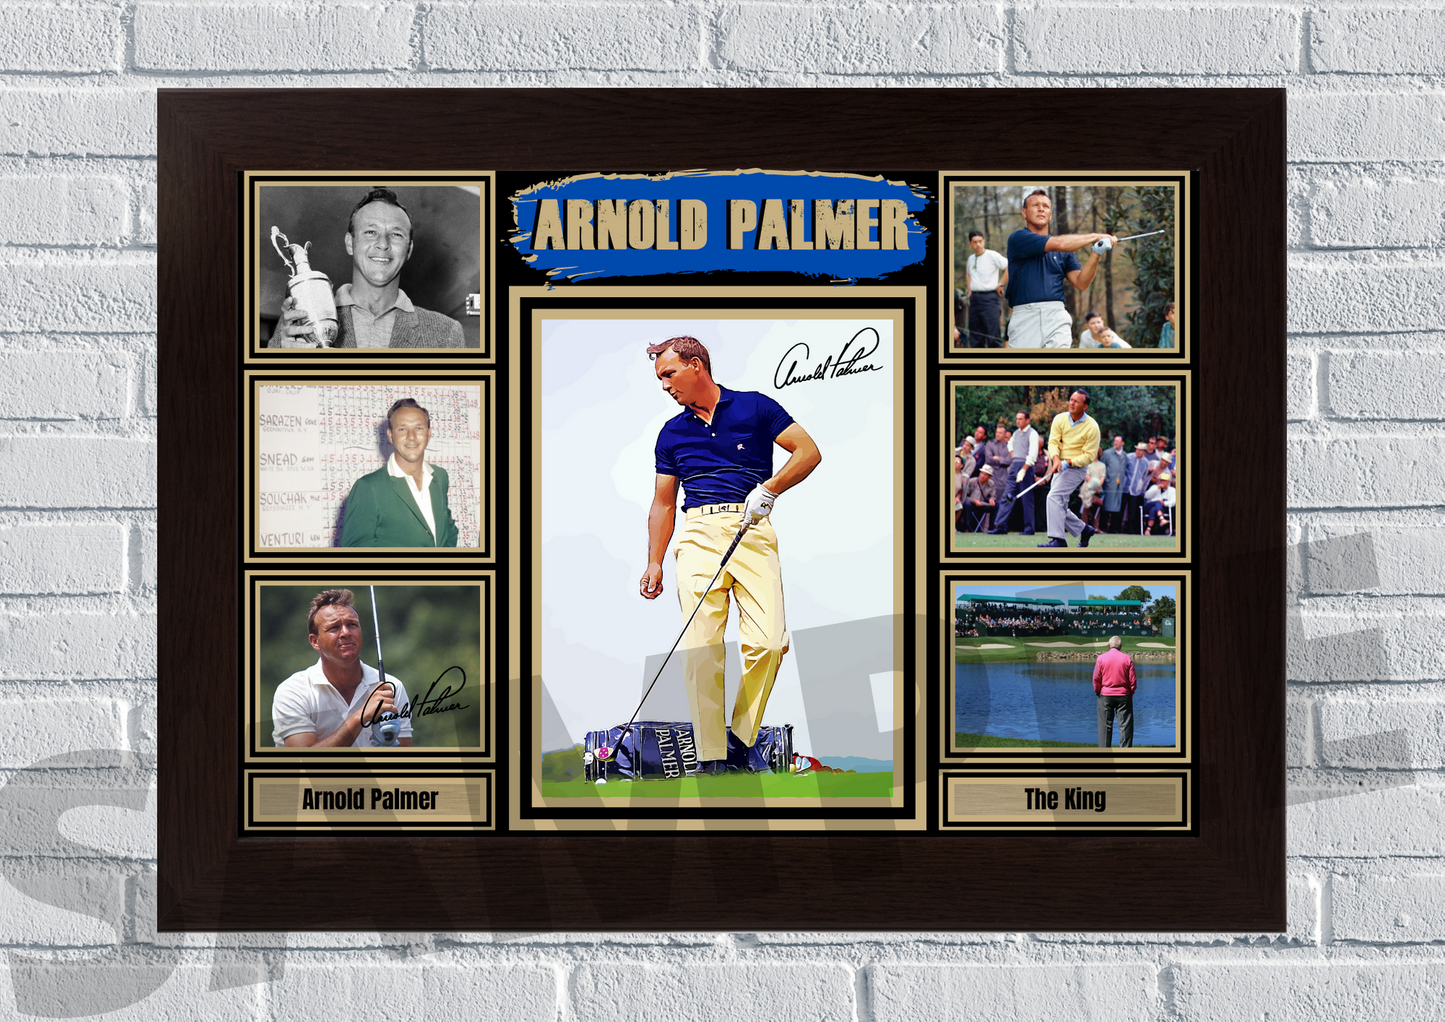 Arnold Palmer (Golf) #94 - Collectable/Gift/Memorabilia signed print